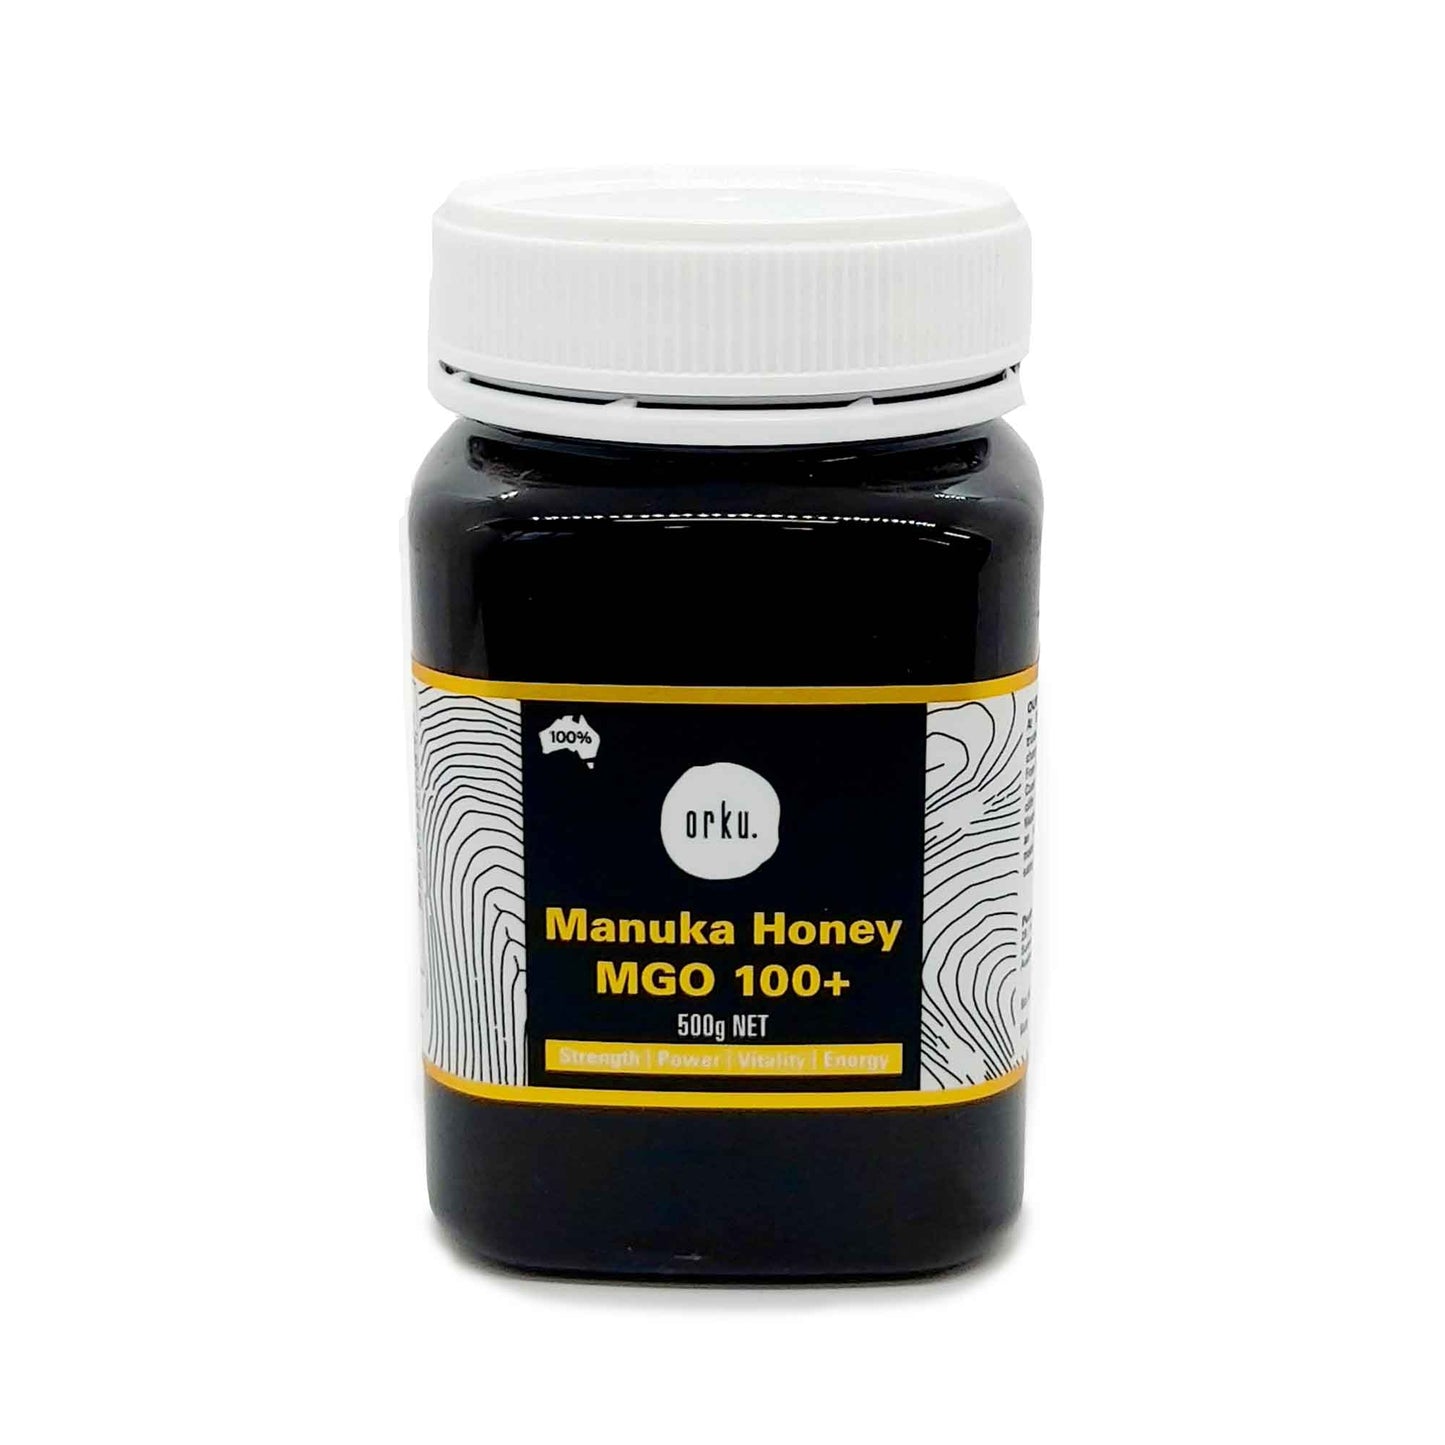 500g MGO 100+ Australian Manuka Honey - 100% Raw Natural Pure Jelly Bush